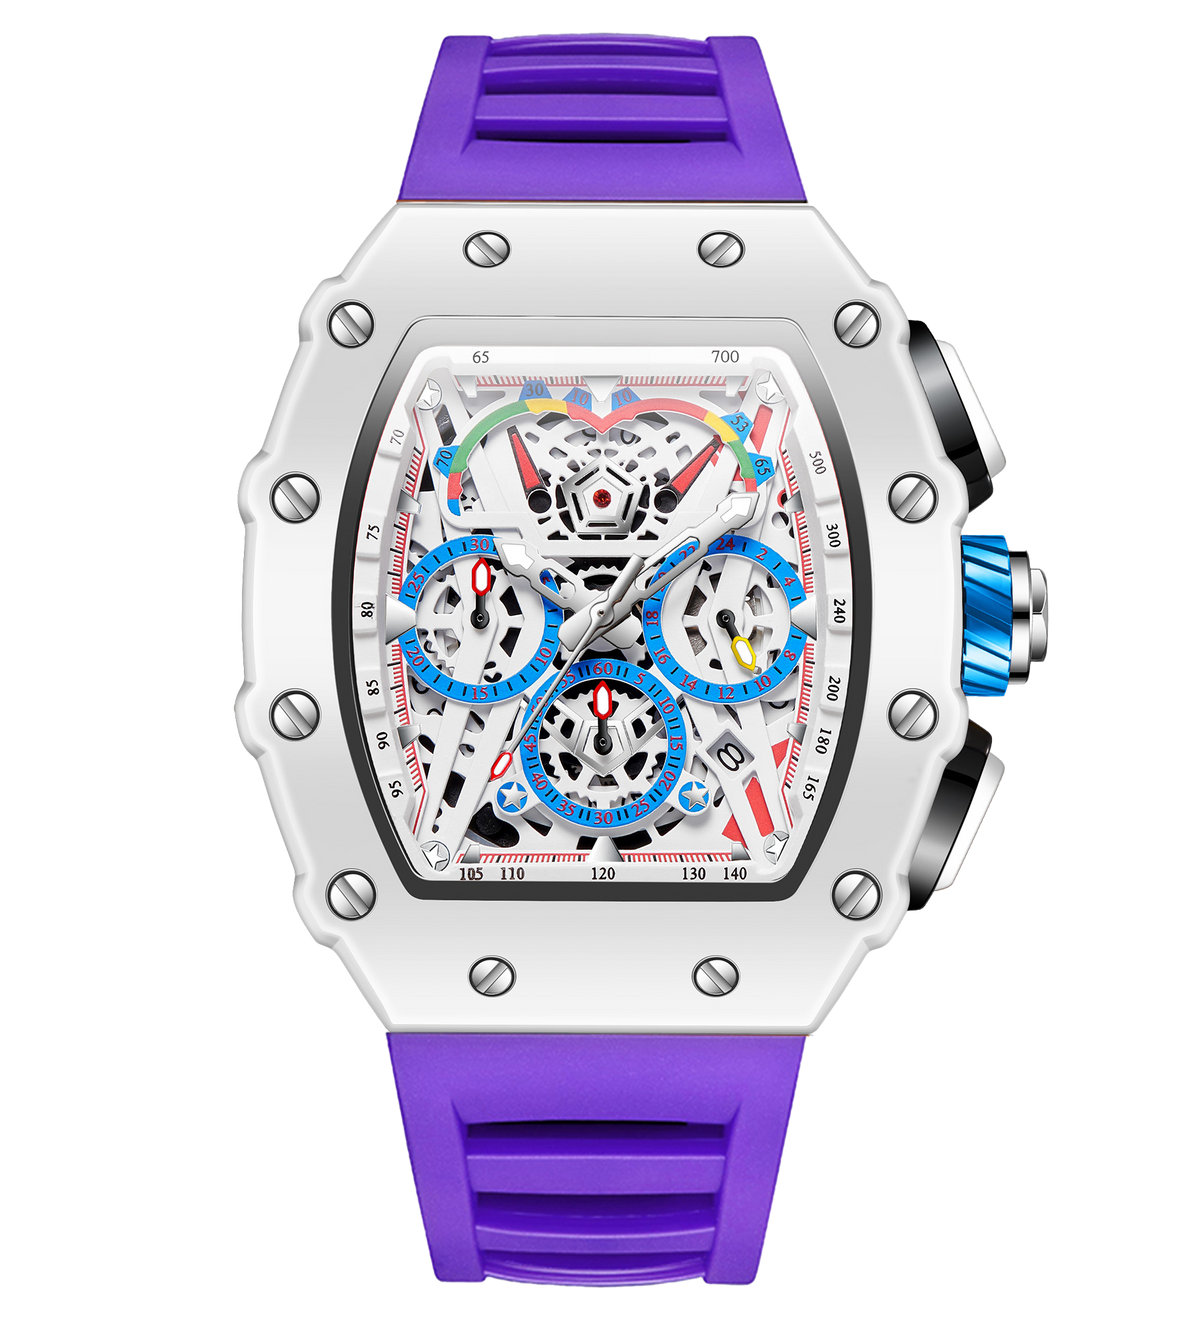 Chronovl-Watch-Smartwatch-apple watch-4.png__PID:6f7e95f5-e680-47cc-8812-0397c092d7e1